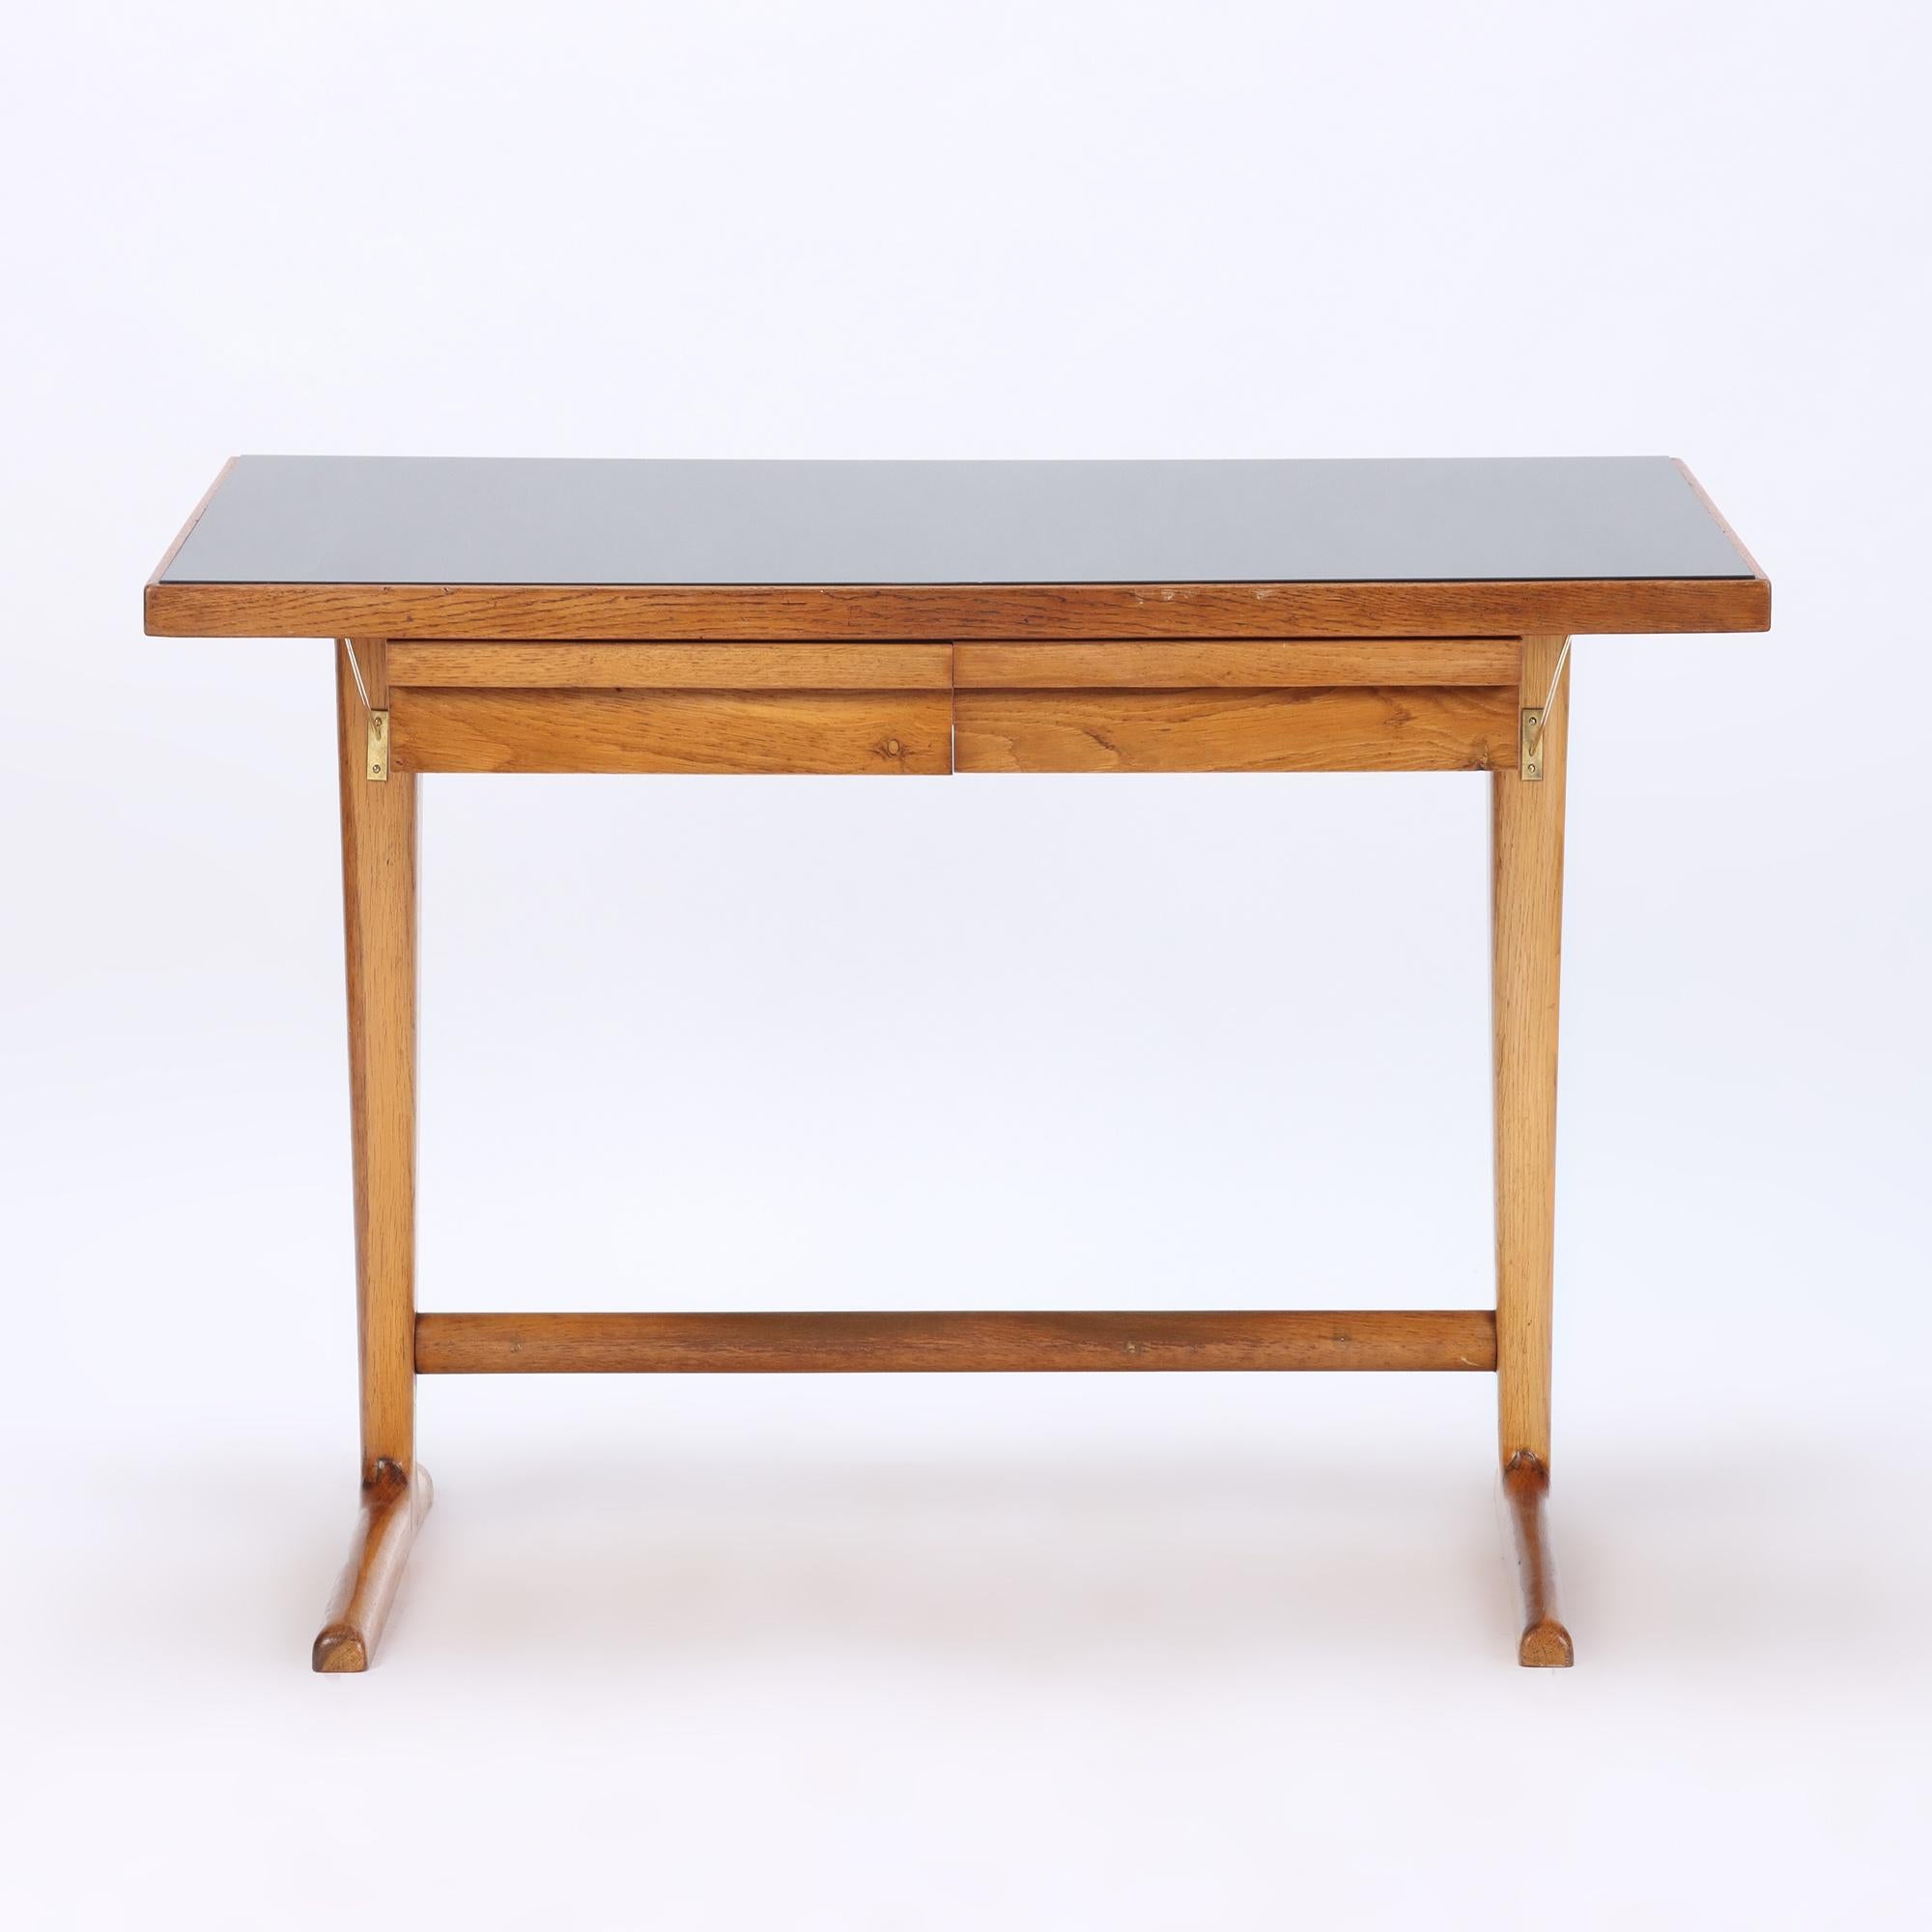 Italian Architect's Oak Table / Desk Made with a Slant, circa 1960 For Sale 1